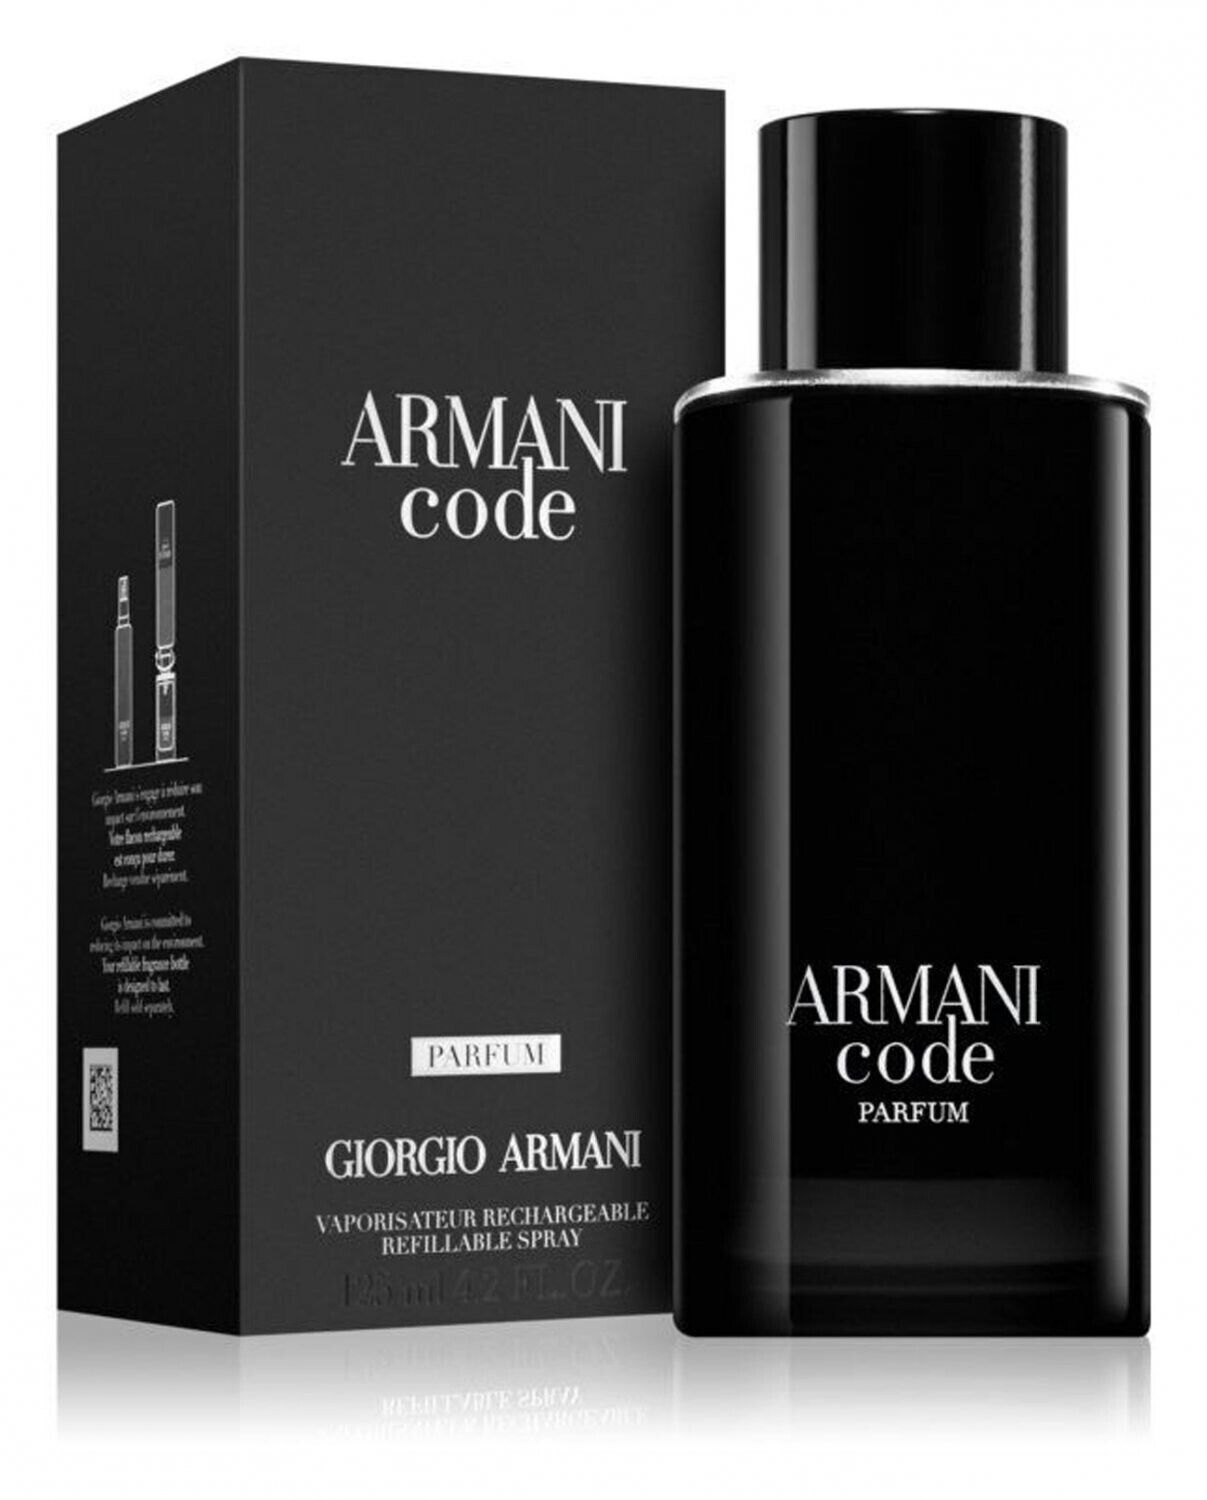 ARMANI CODE PARFUM BY GIORGIO ARMANI MEN 4.2 FL OZ BRAND NEW sealed